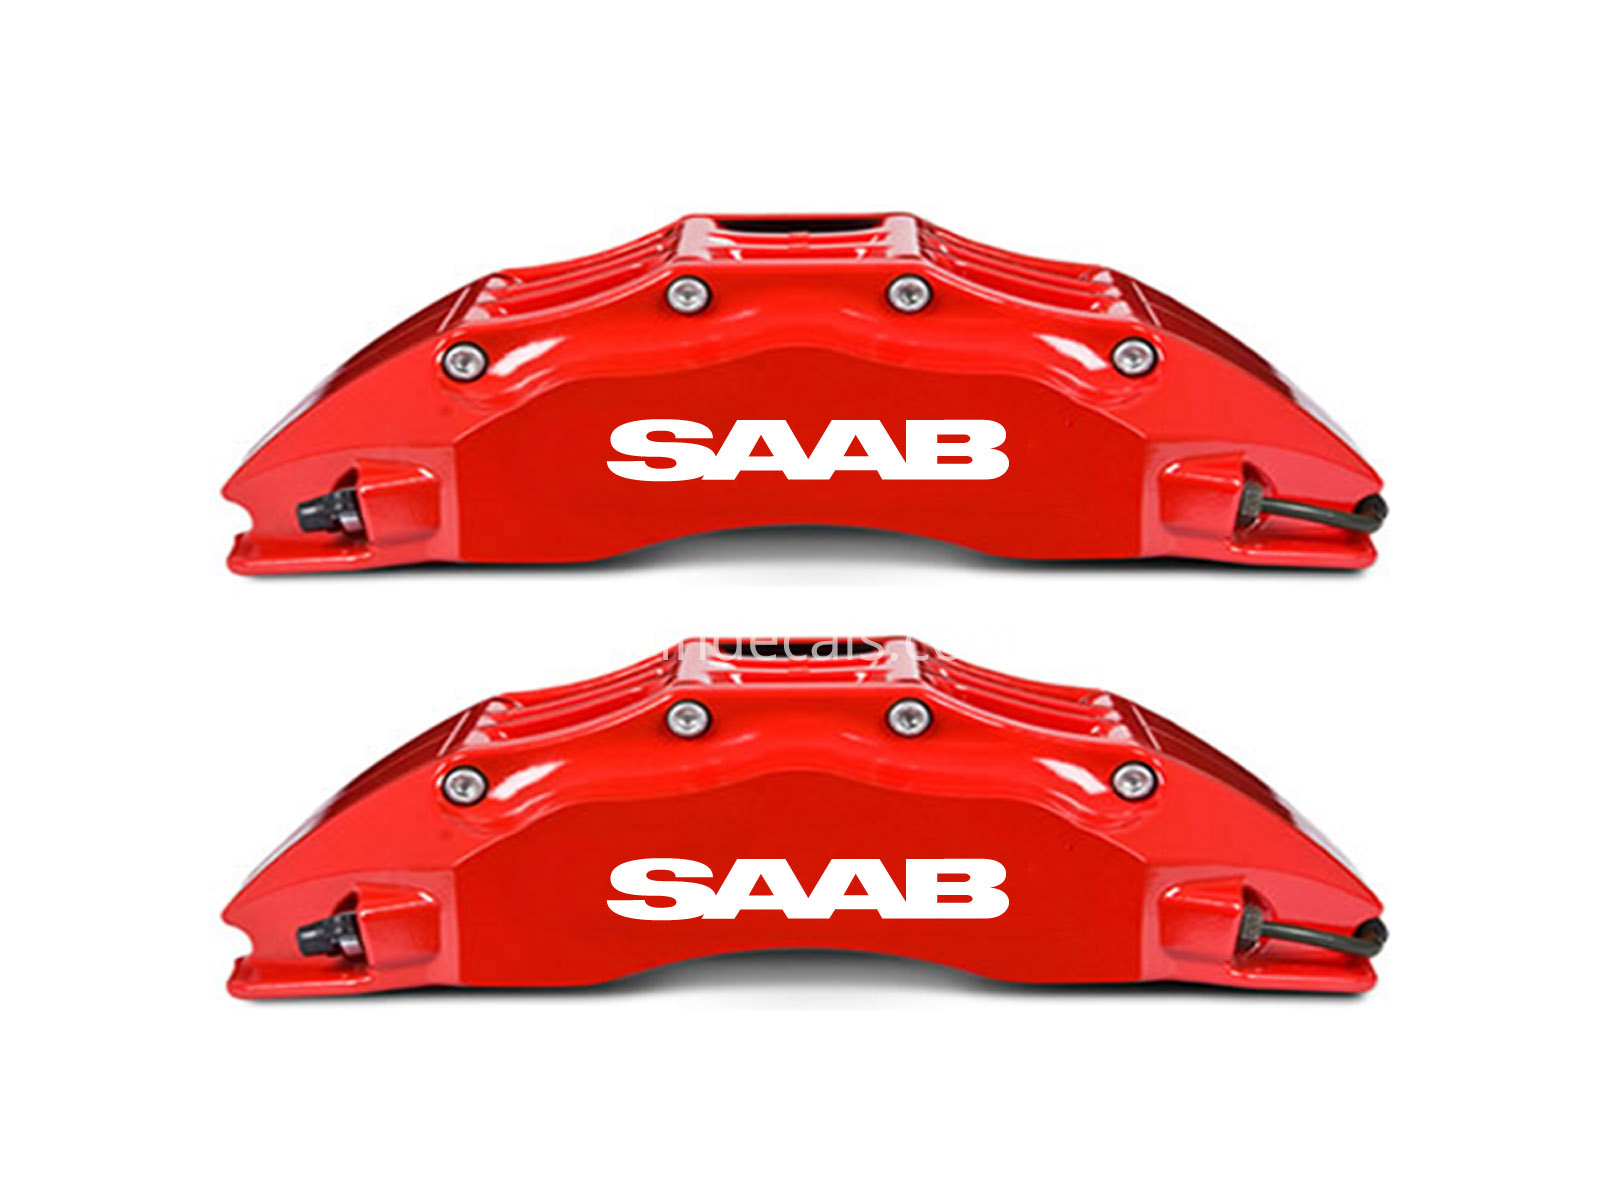 6 x Saab Stickers for Brakes - White